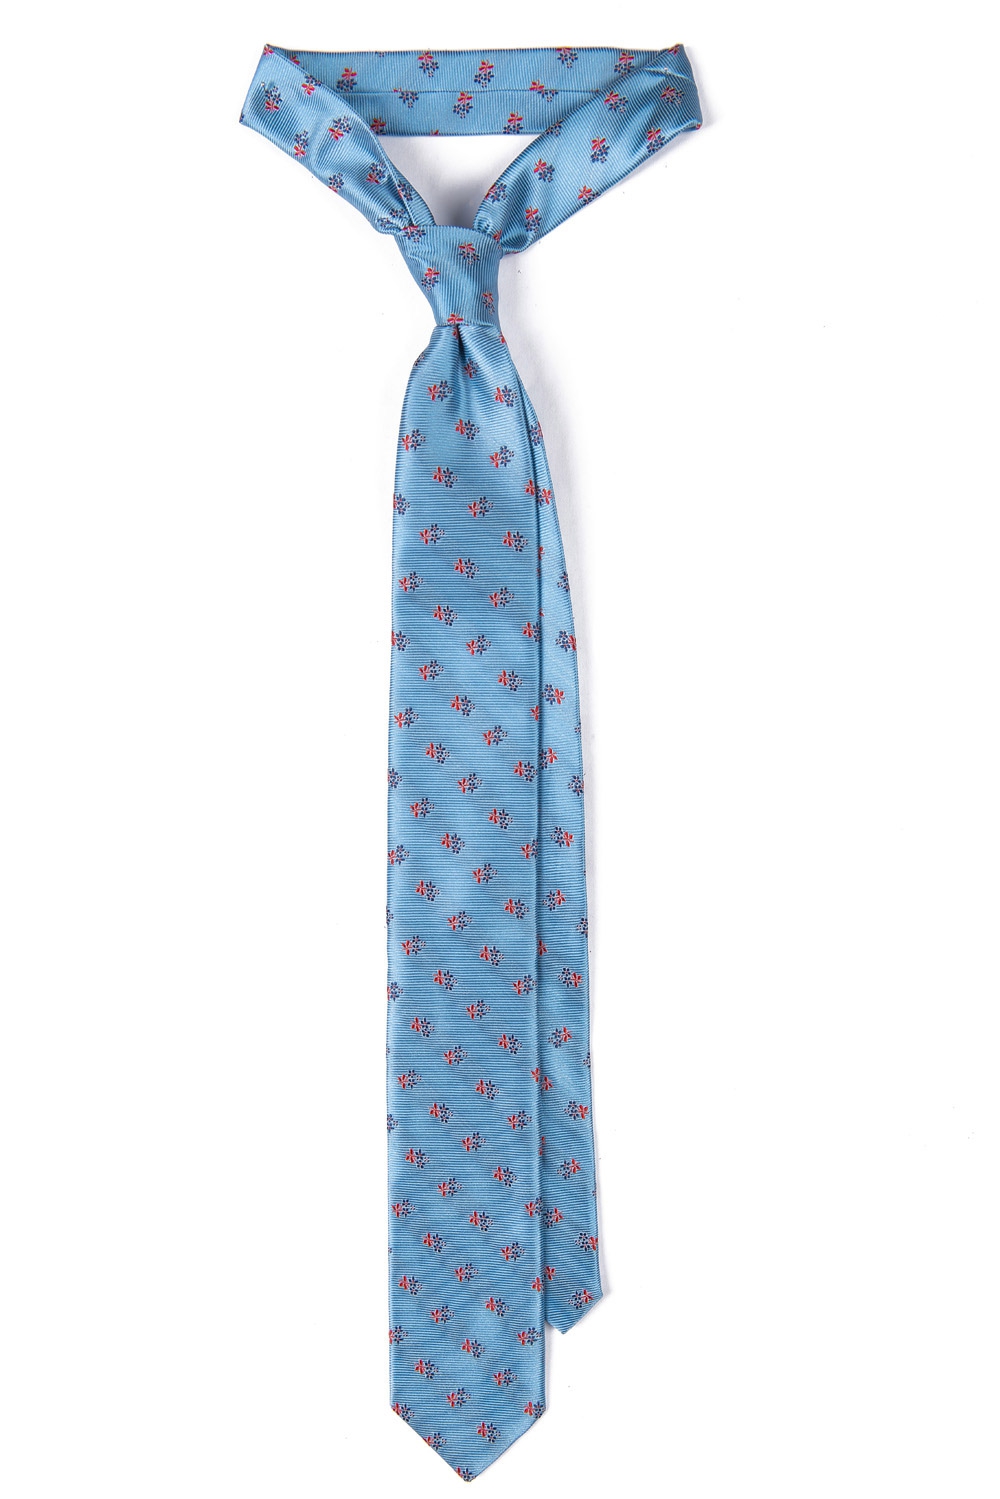 Cravata poliester bleu print floral 0